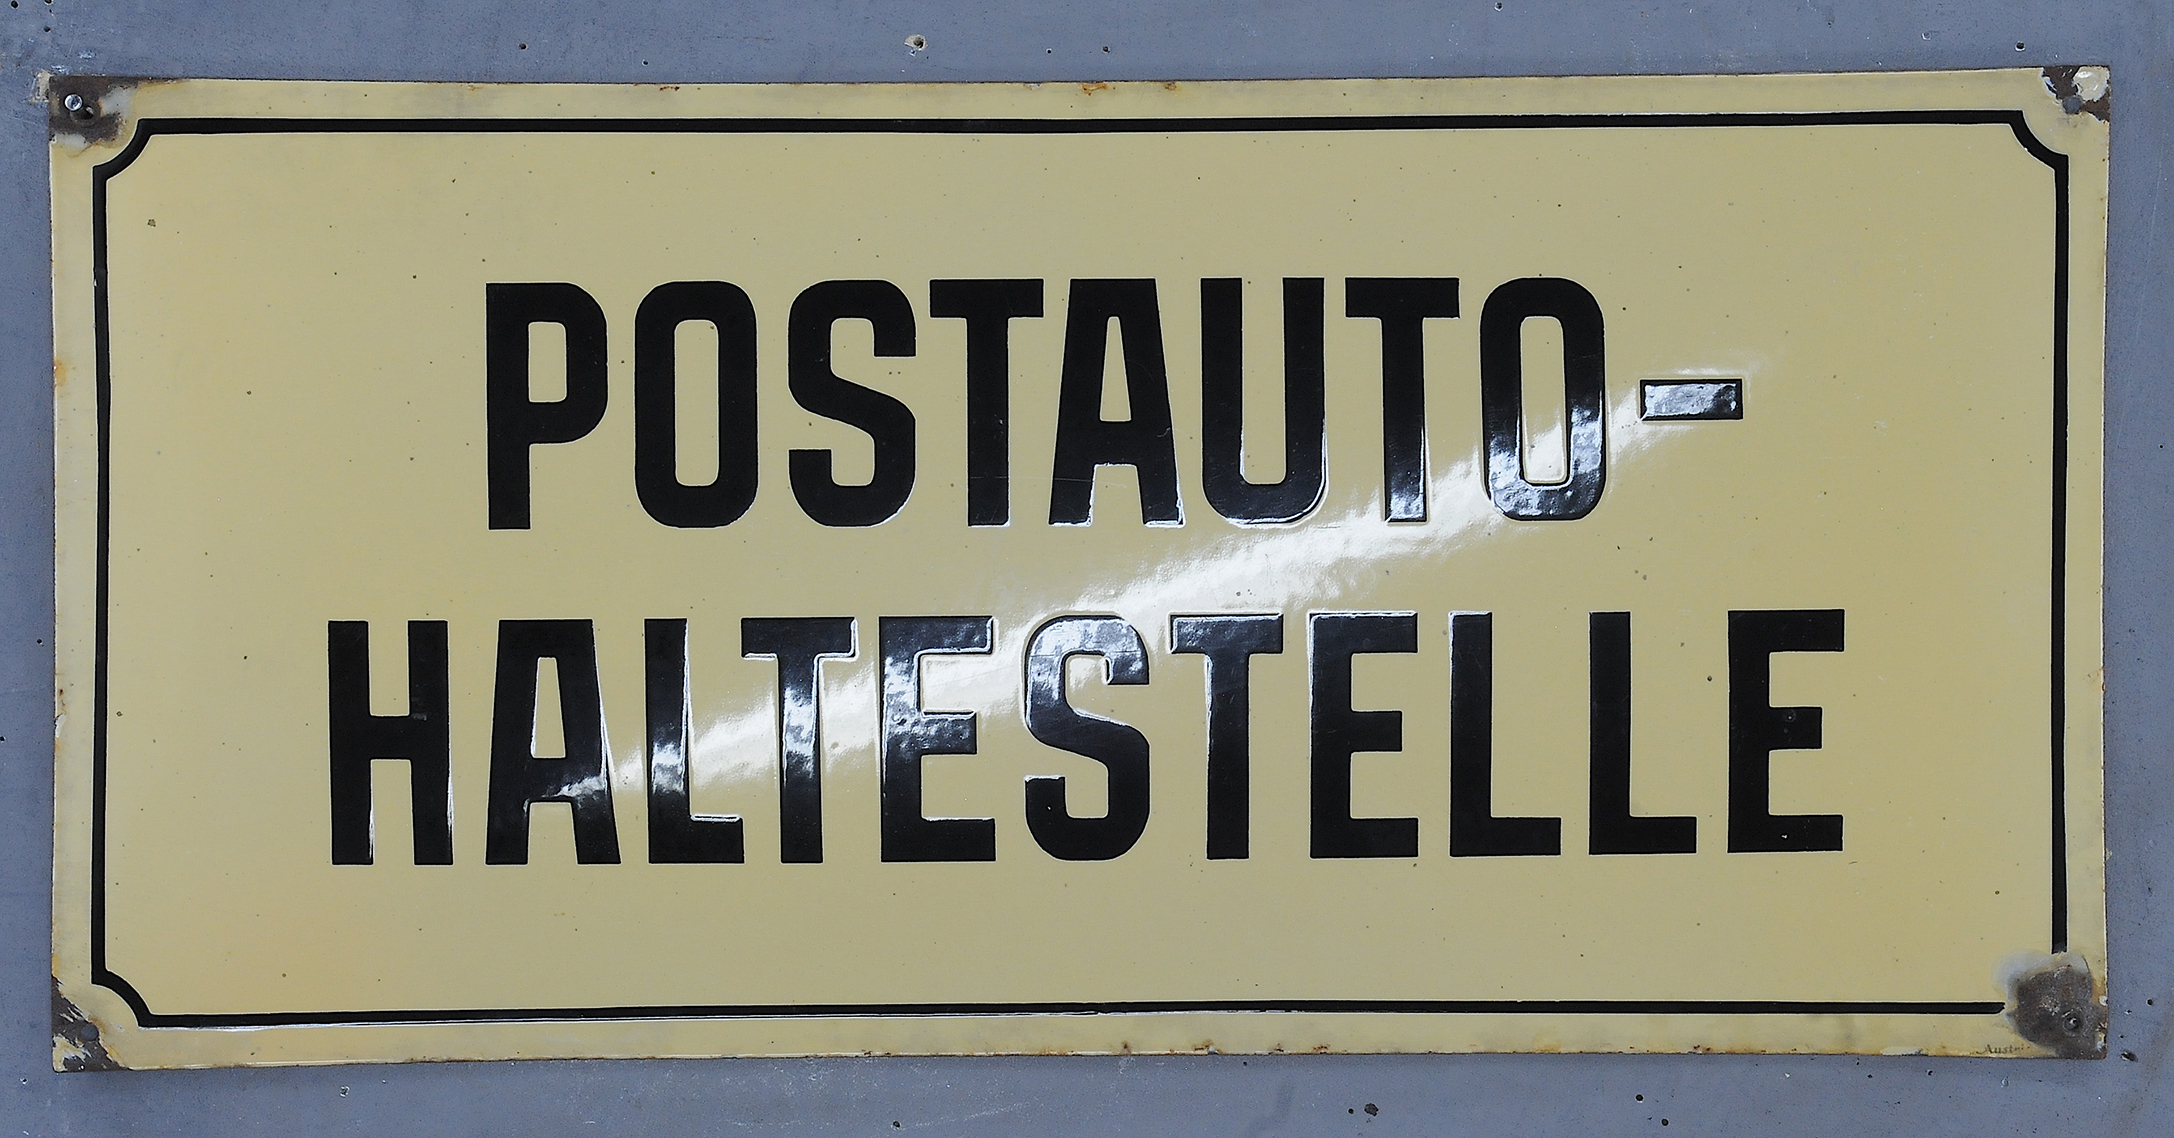 Postauto-Haltestelle - Image 3 of 3